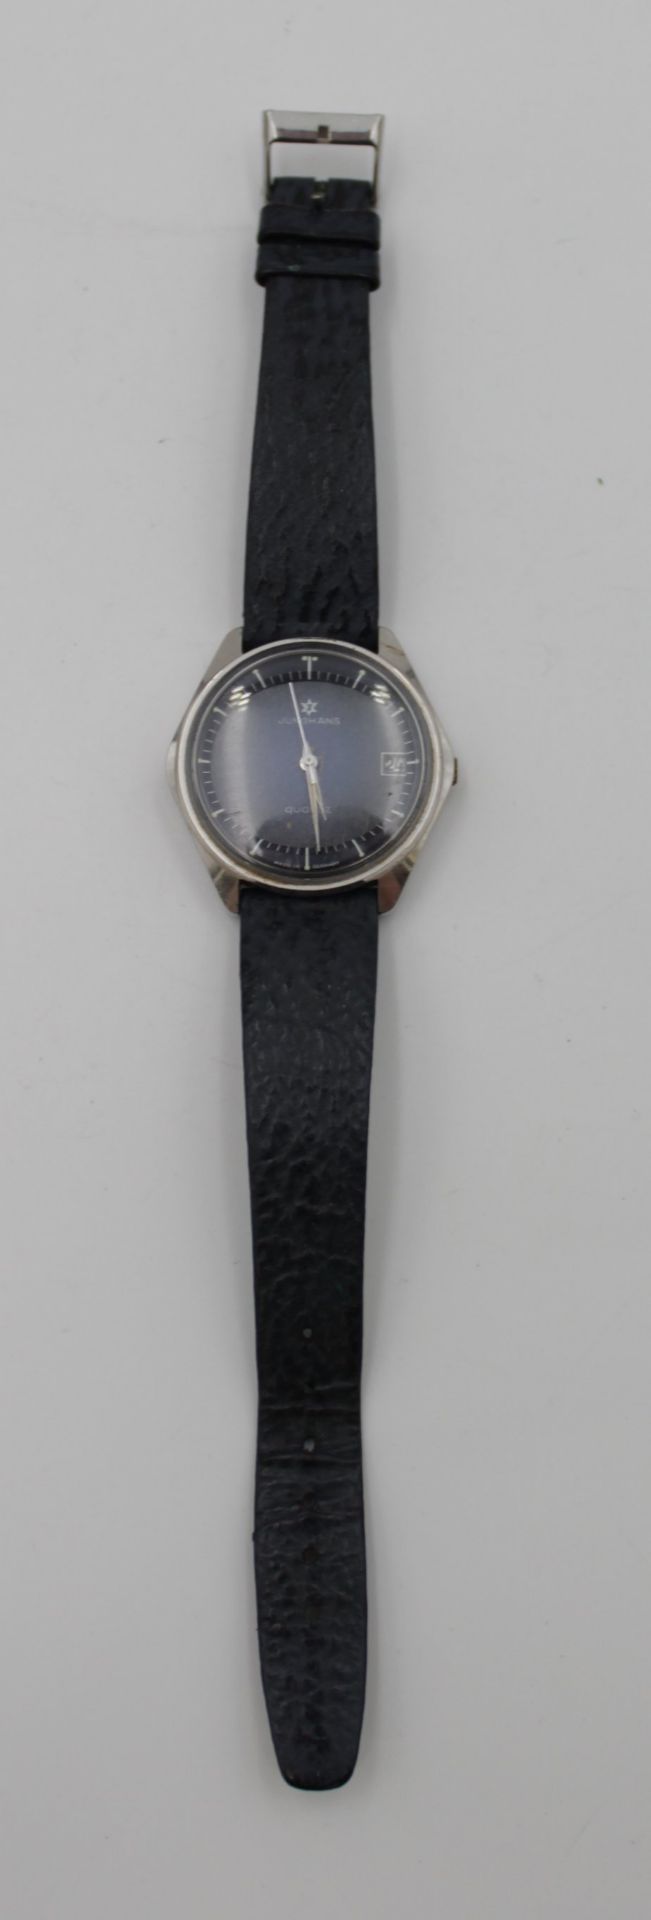 Herren-Armbanduhr, Junghans, Quarz, getragene Erhaltung, D-3,5cm.